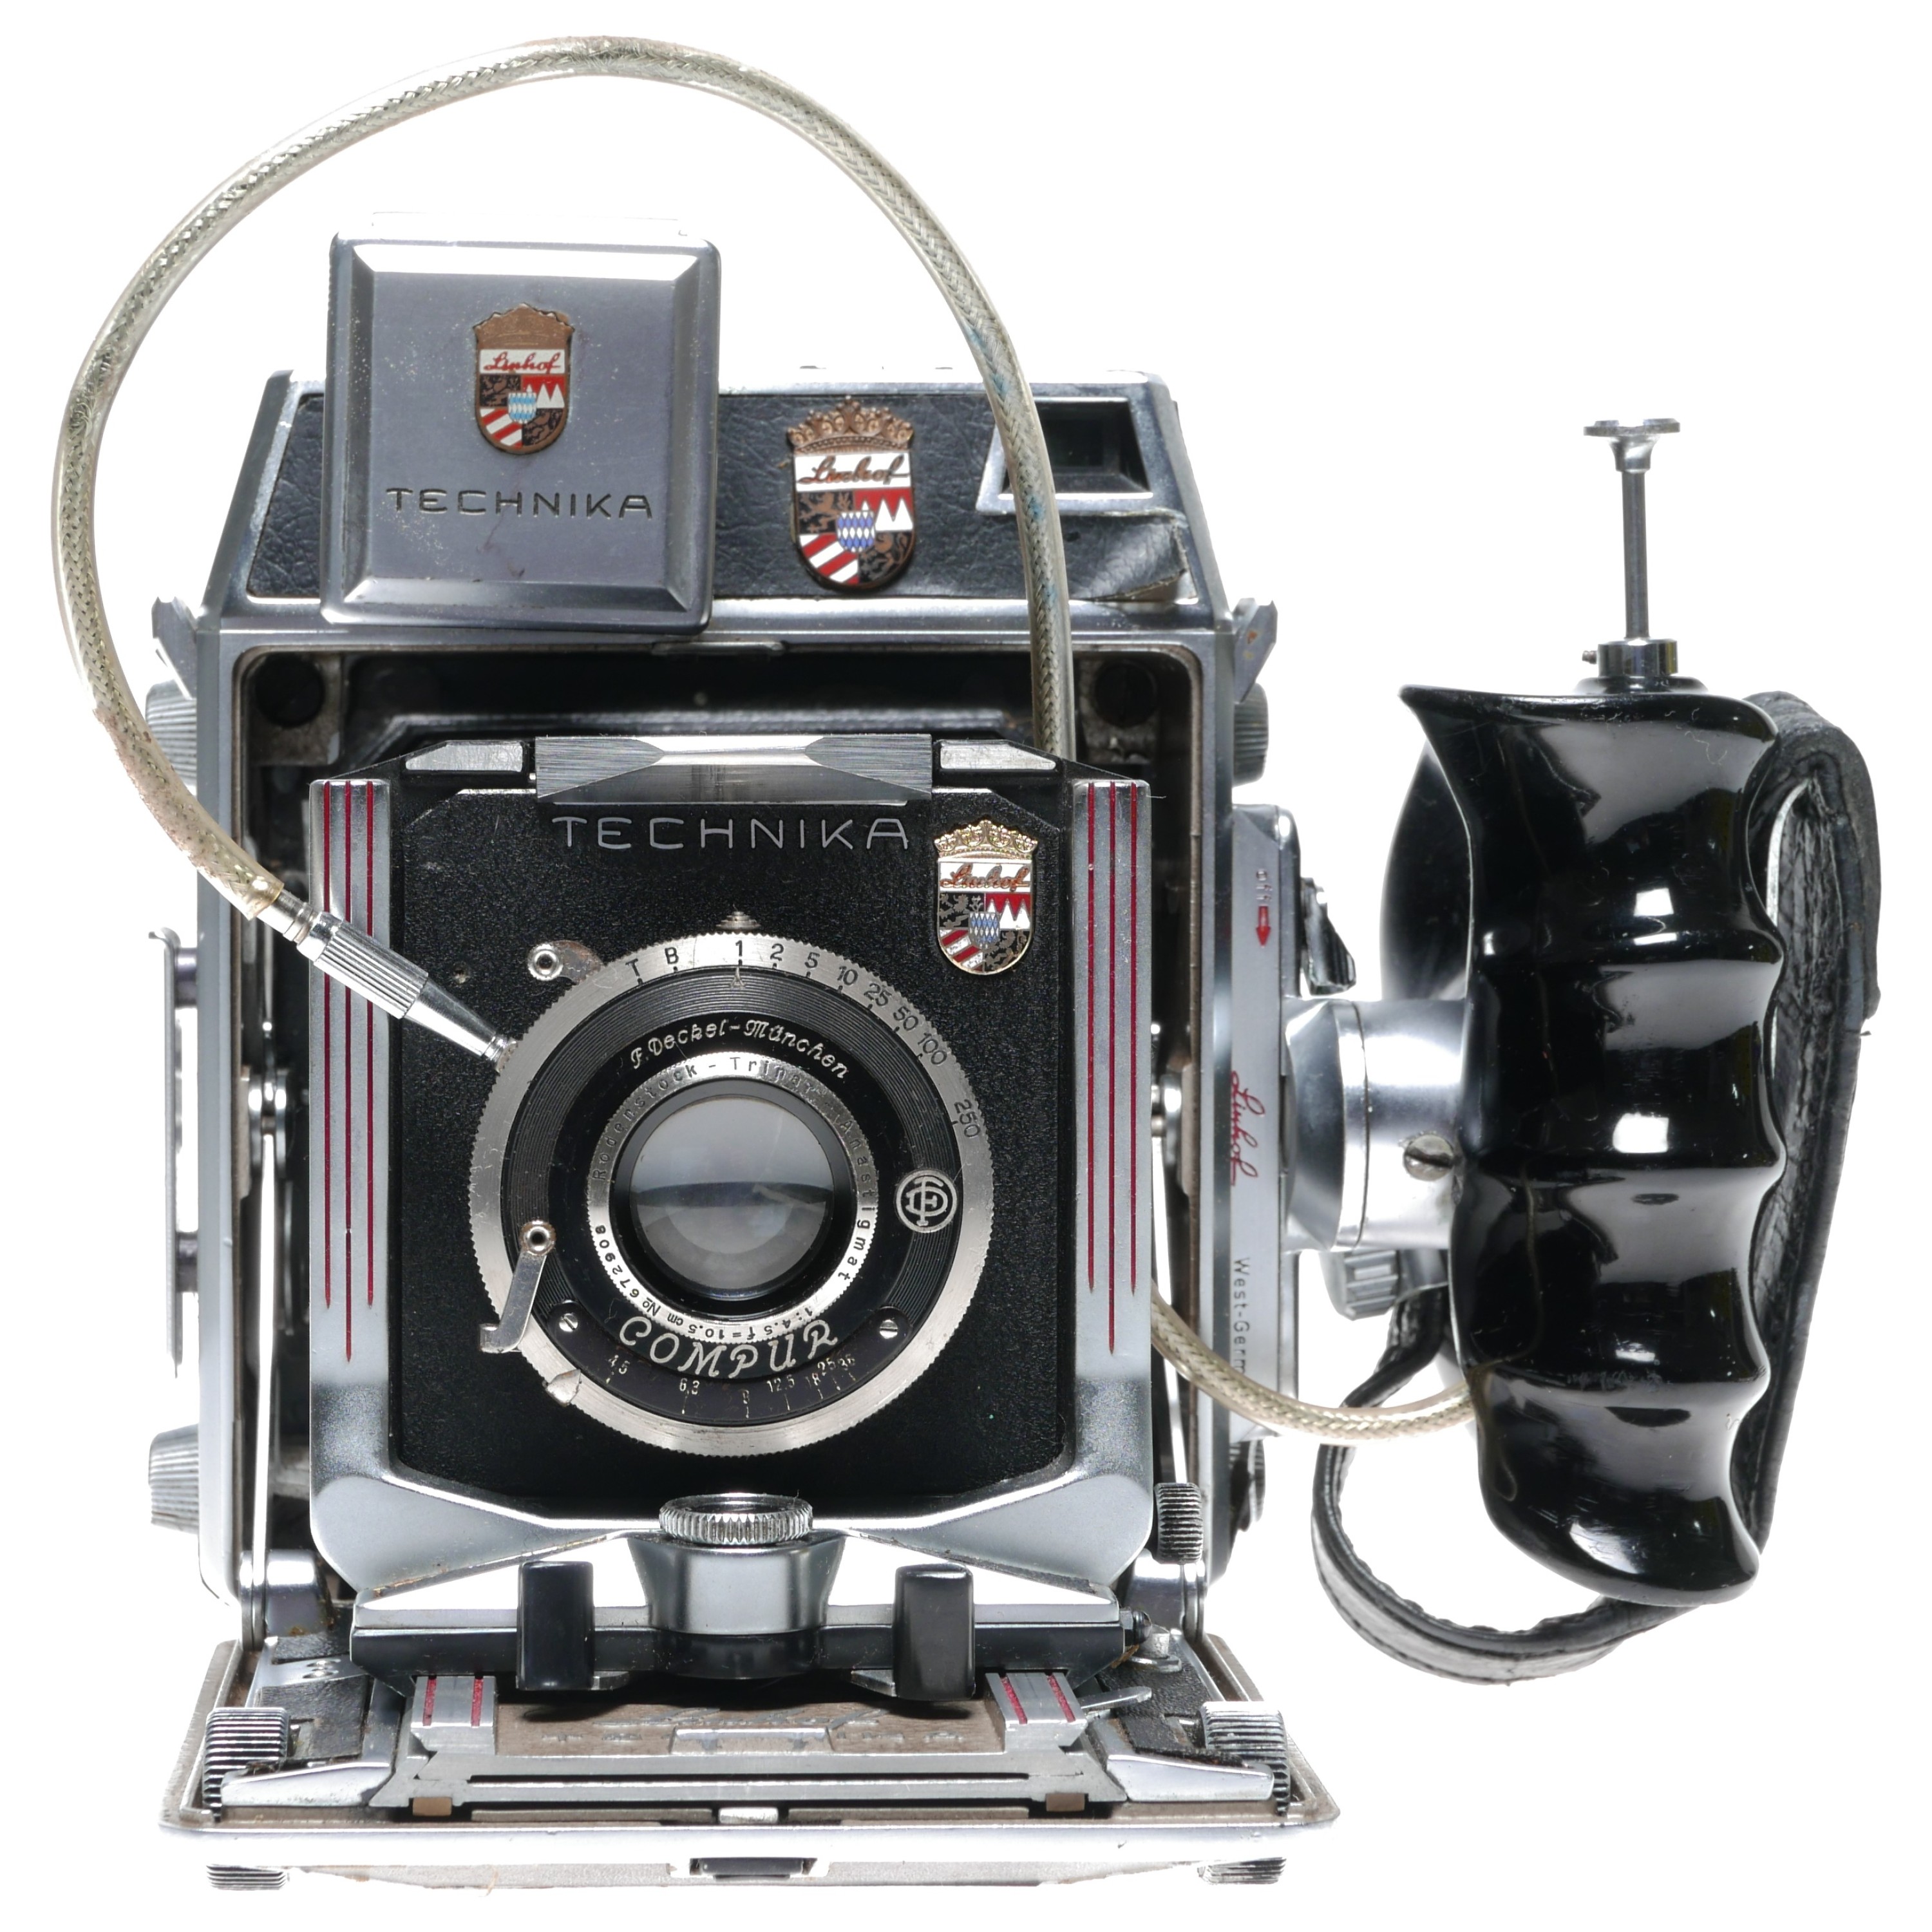 linhof-super-technika-6x9-camera-trinar-anastigmat-105mm-lens